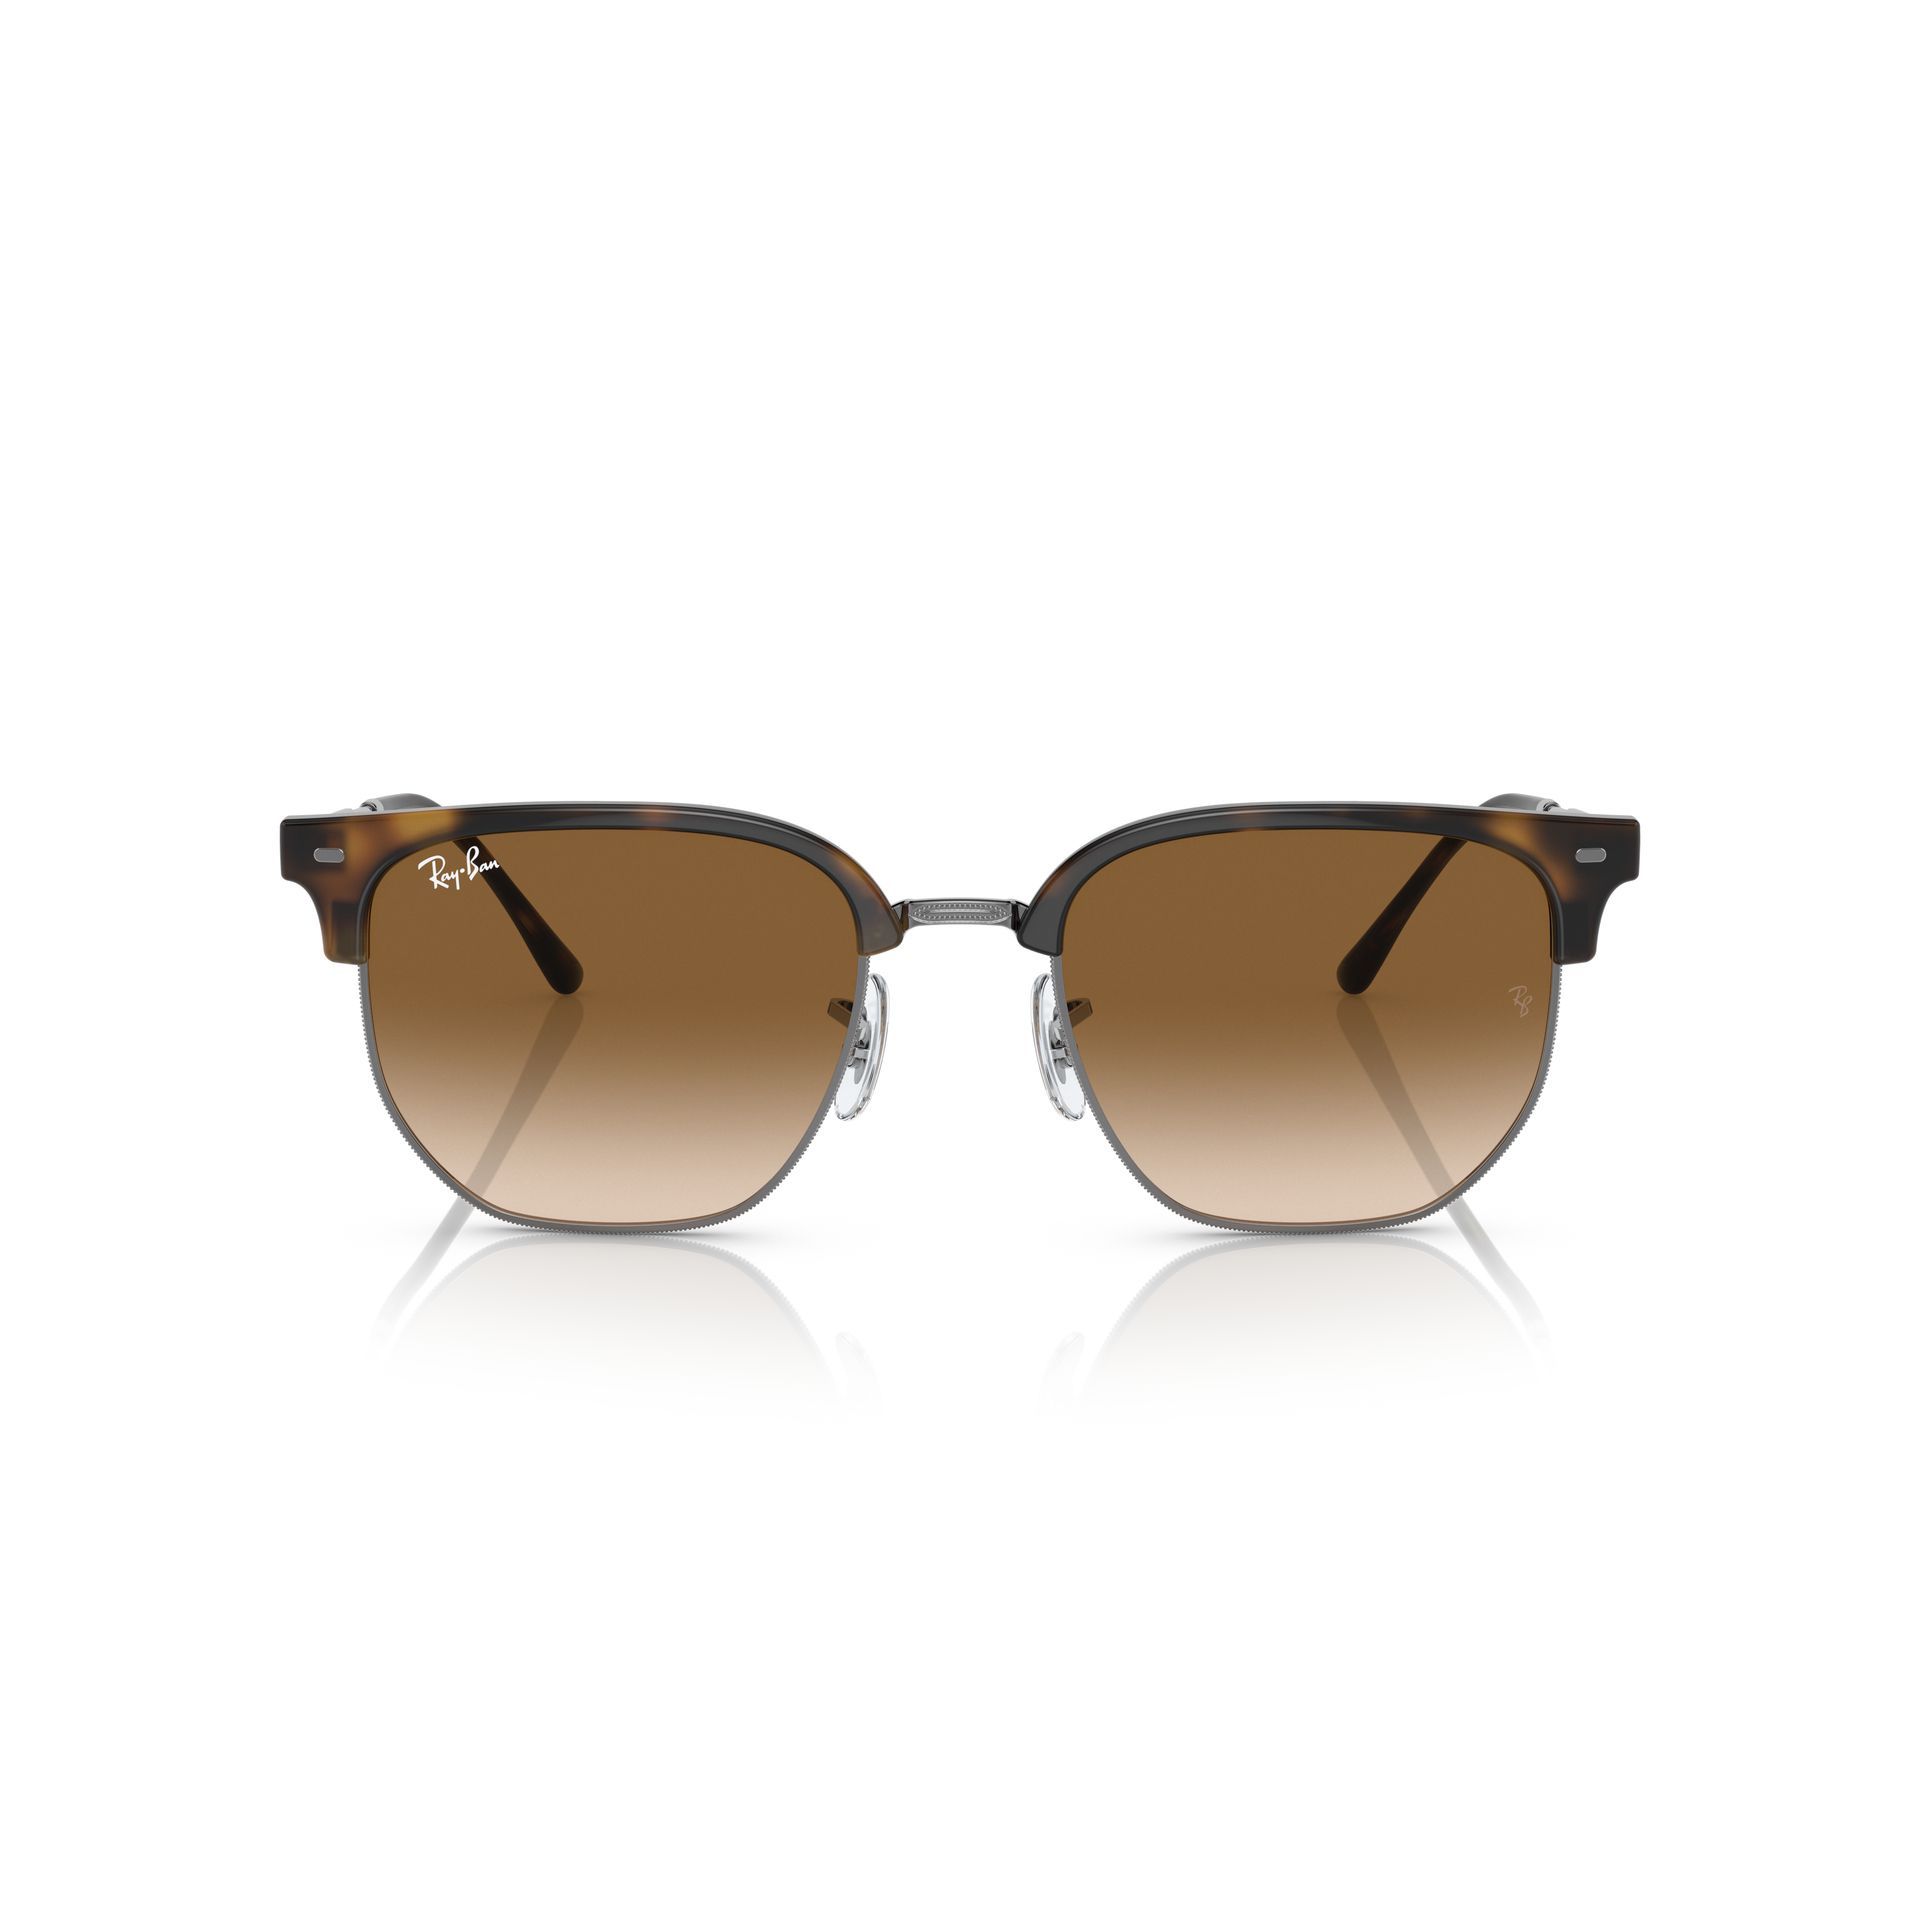 0RB4416 Irregular Sunglasses 710 51 - size 53